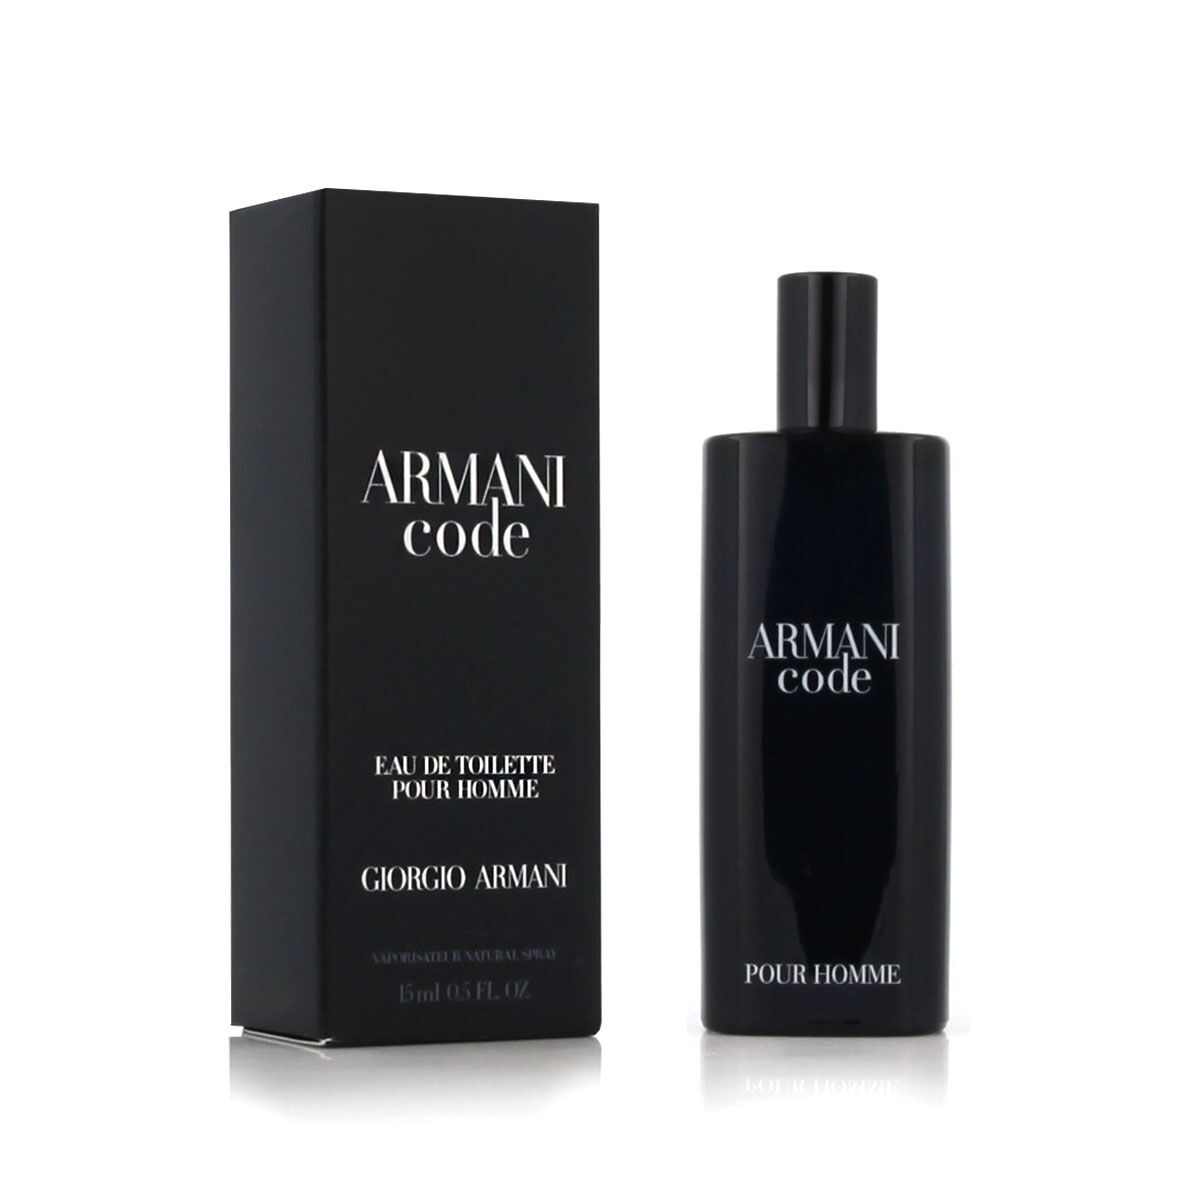 Parfum Homme Giorgio Armani EDT Code 15 ml